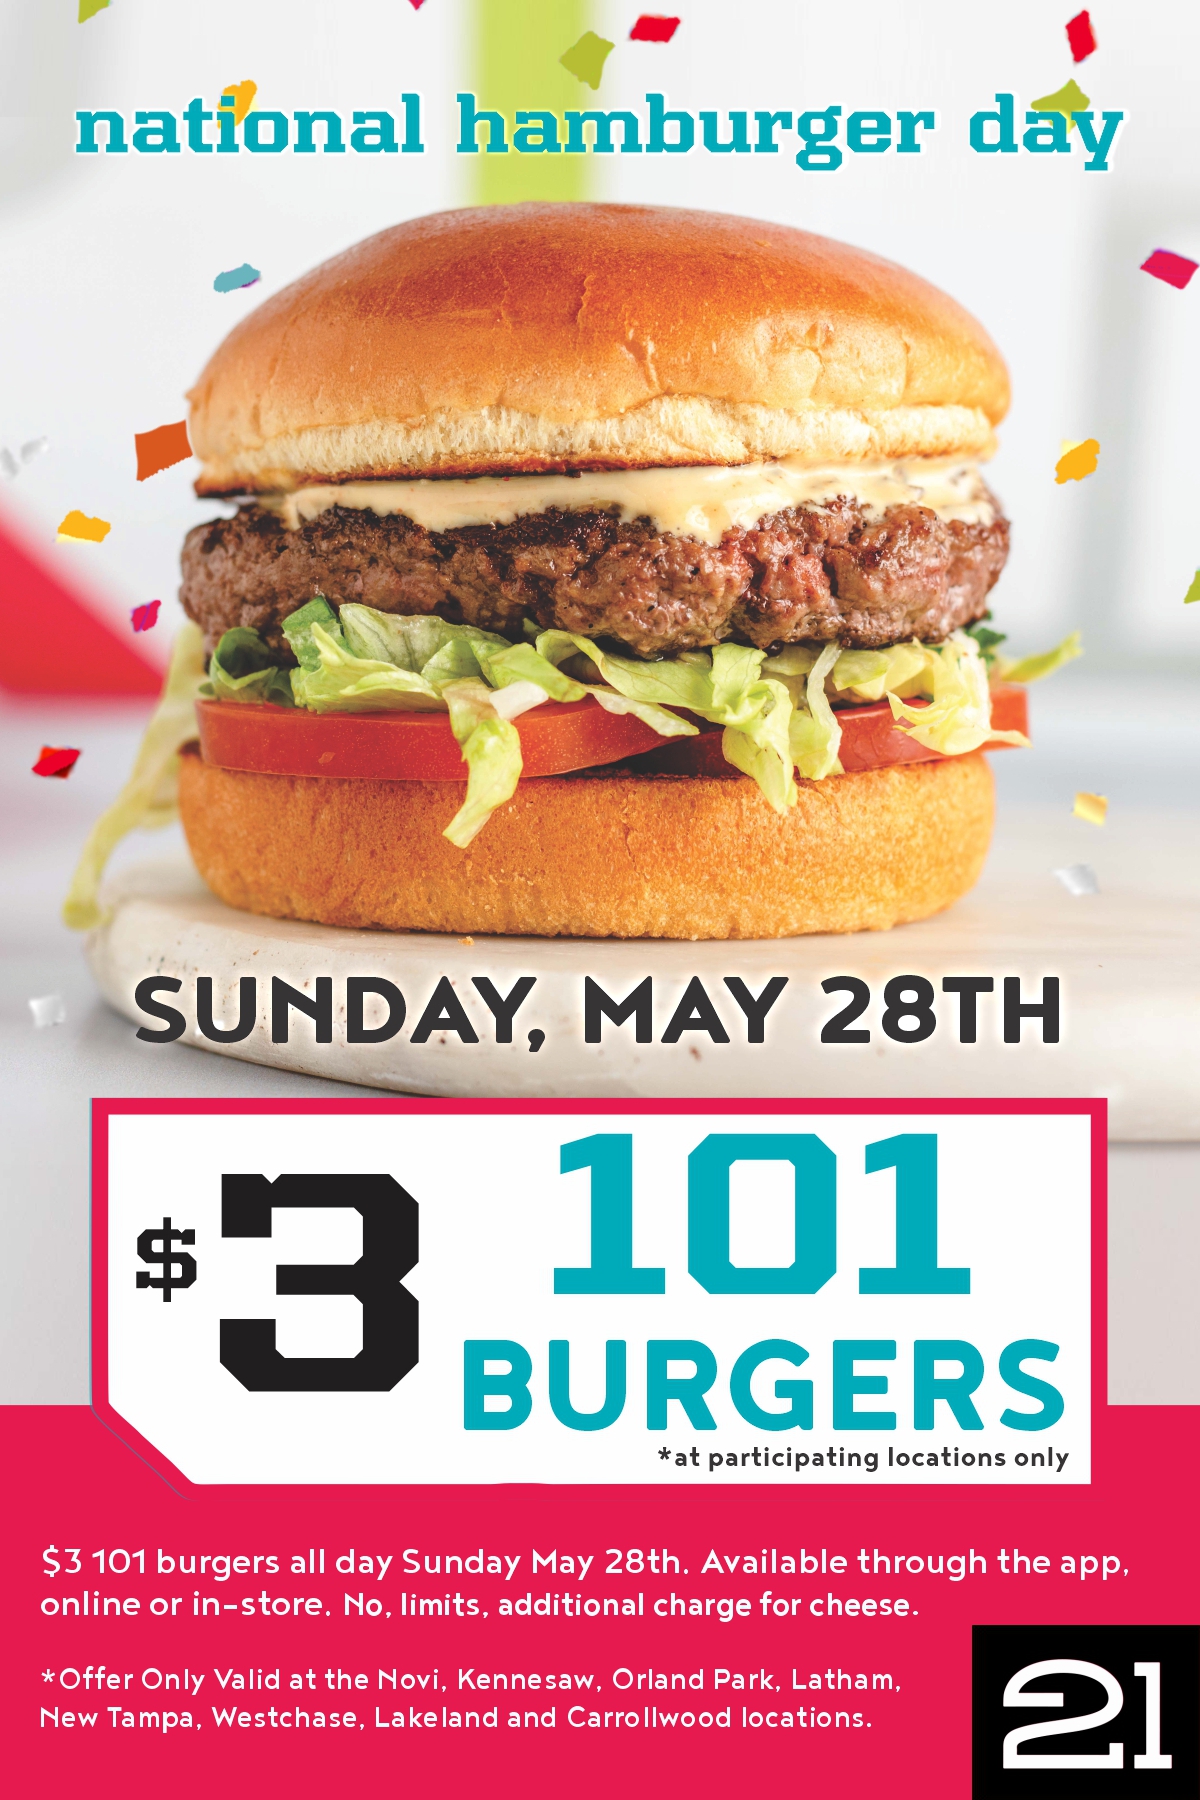 National Hamburger Day is May 28th! Burger 21 Burgers Reinvented